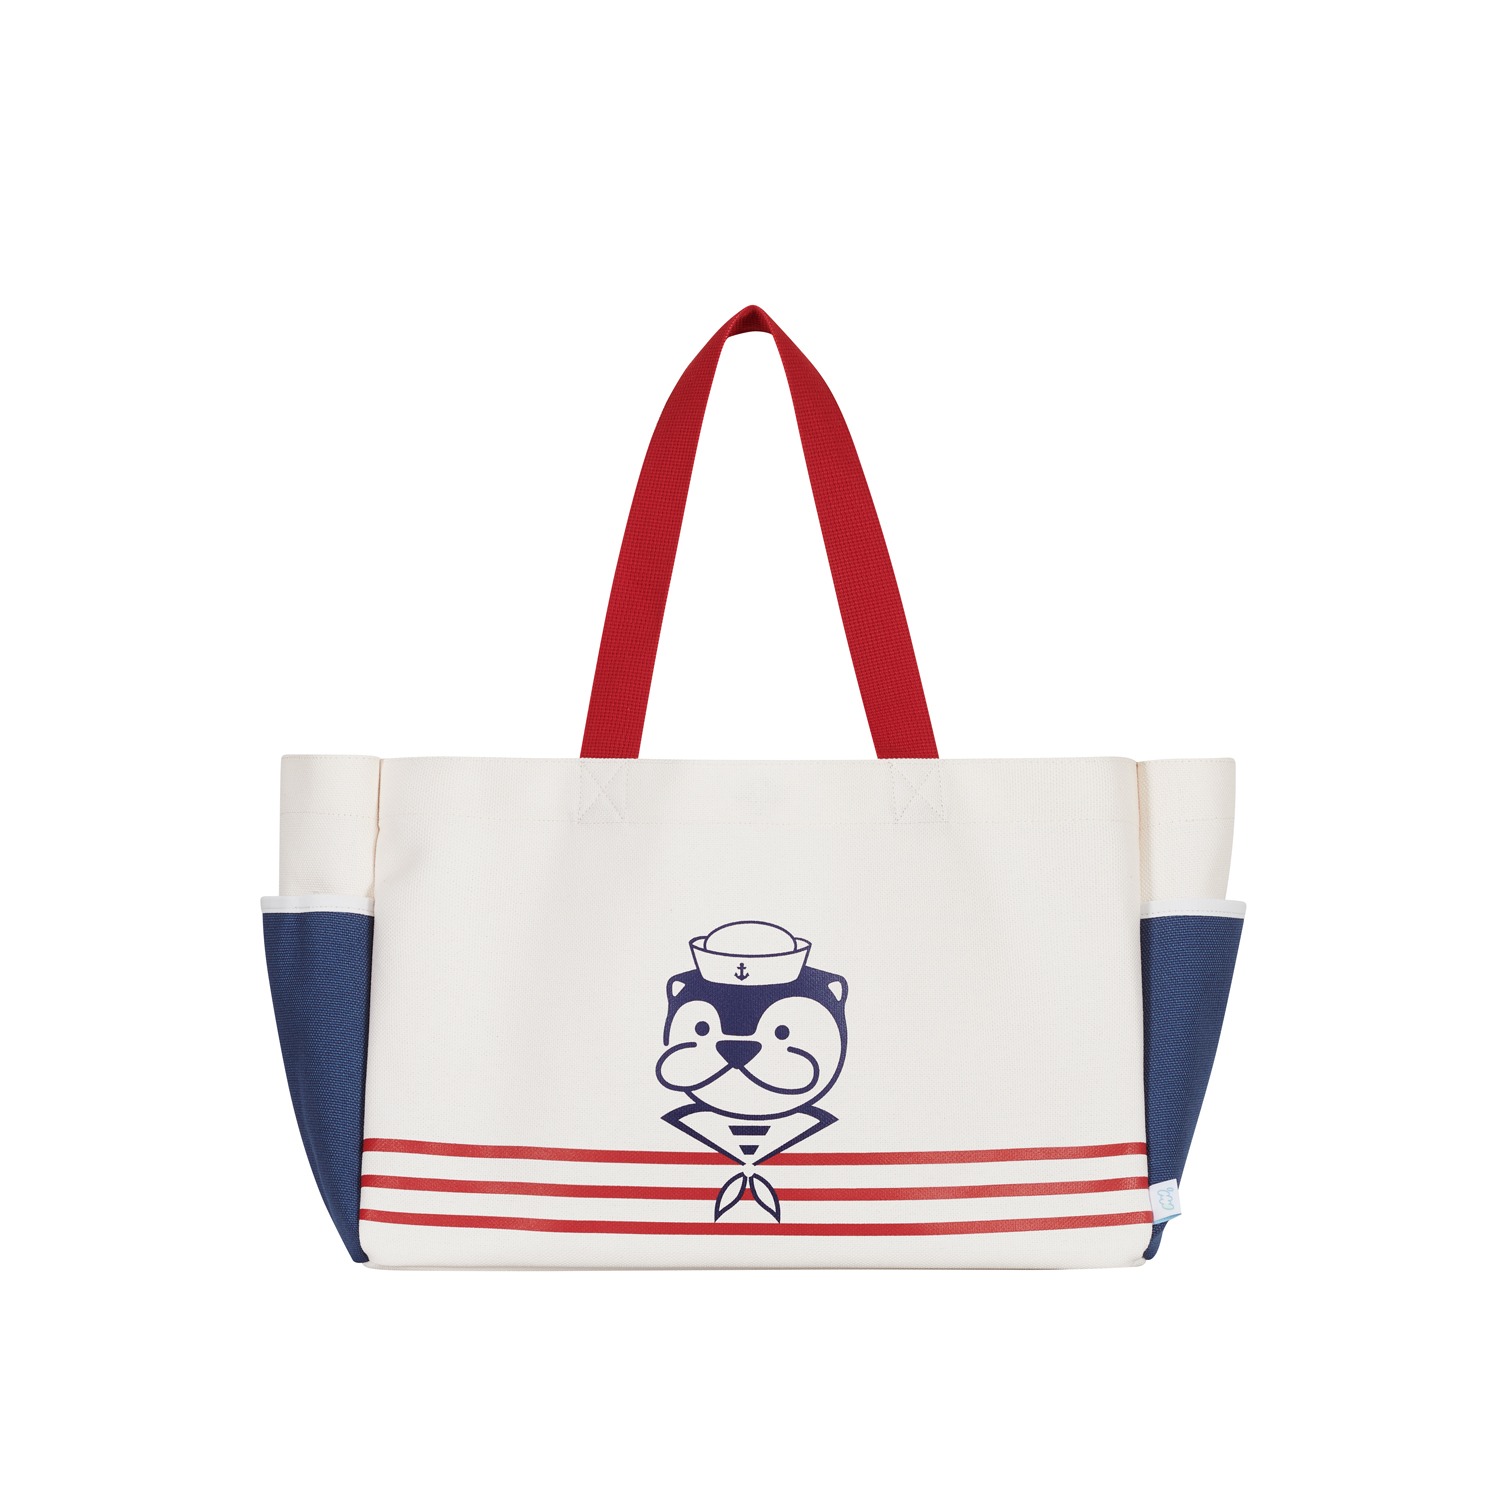 Darcy Sailor Beach Bag